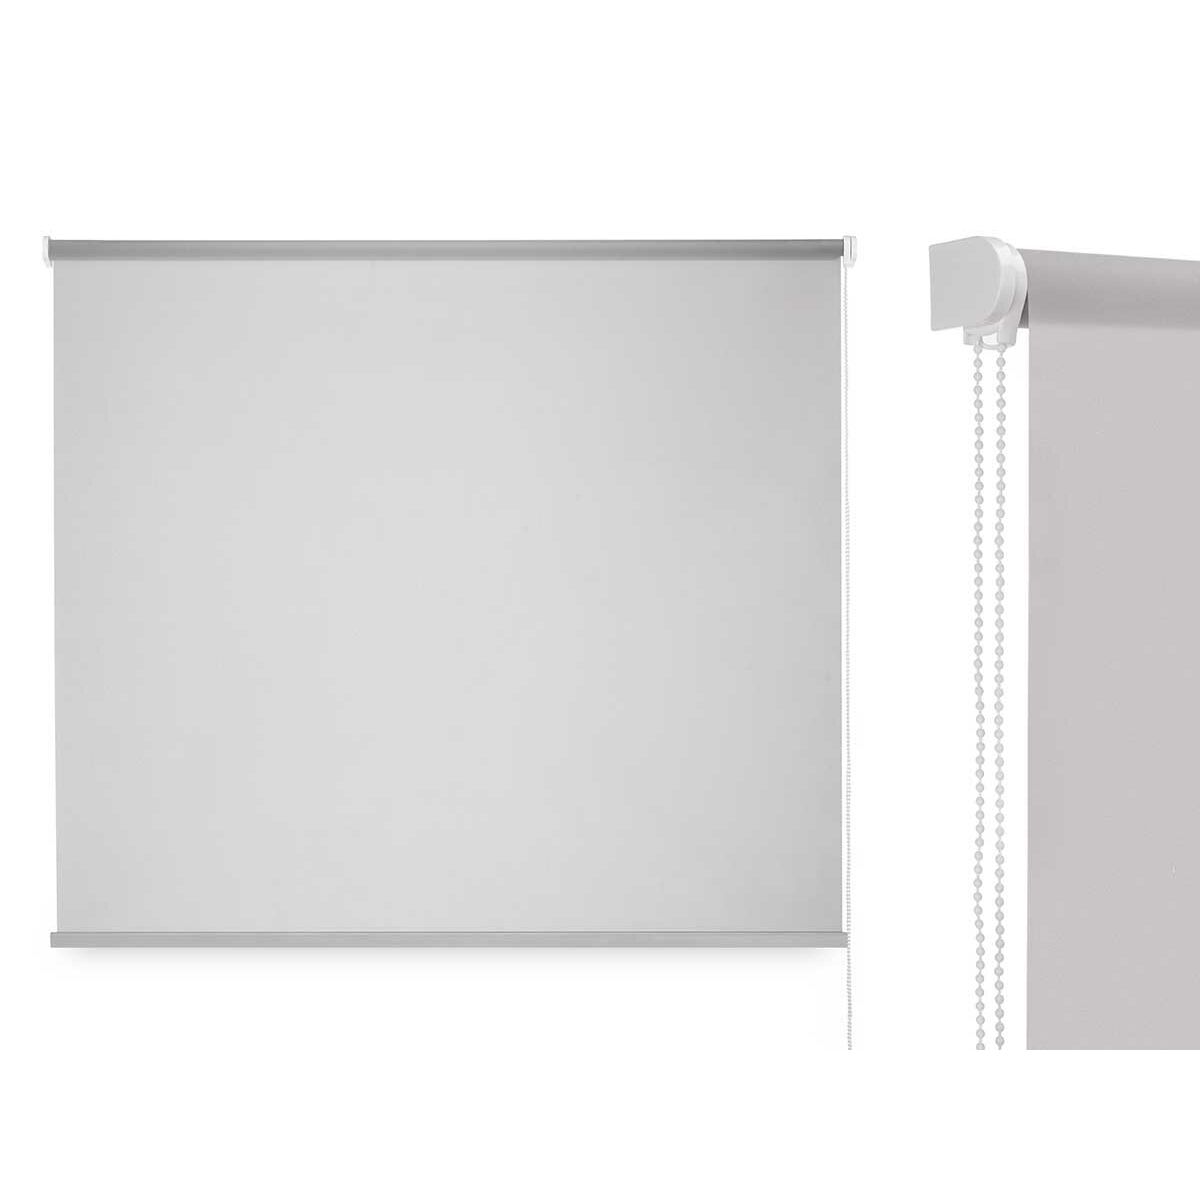 Roller blinds 120 x 180 cm Grey Cloth Plastic (6 Units)